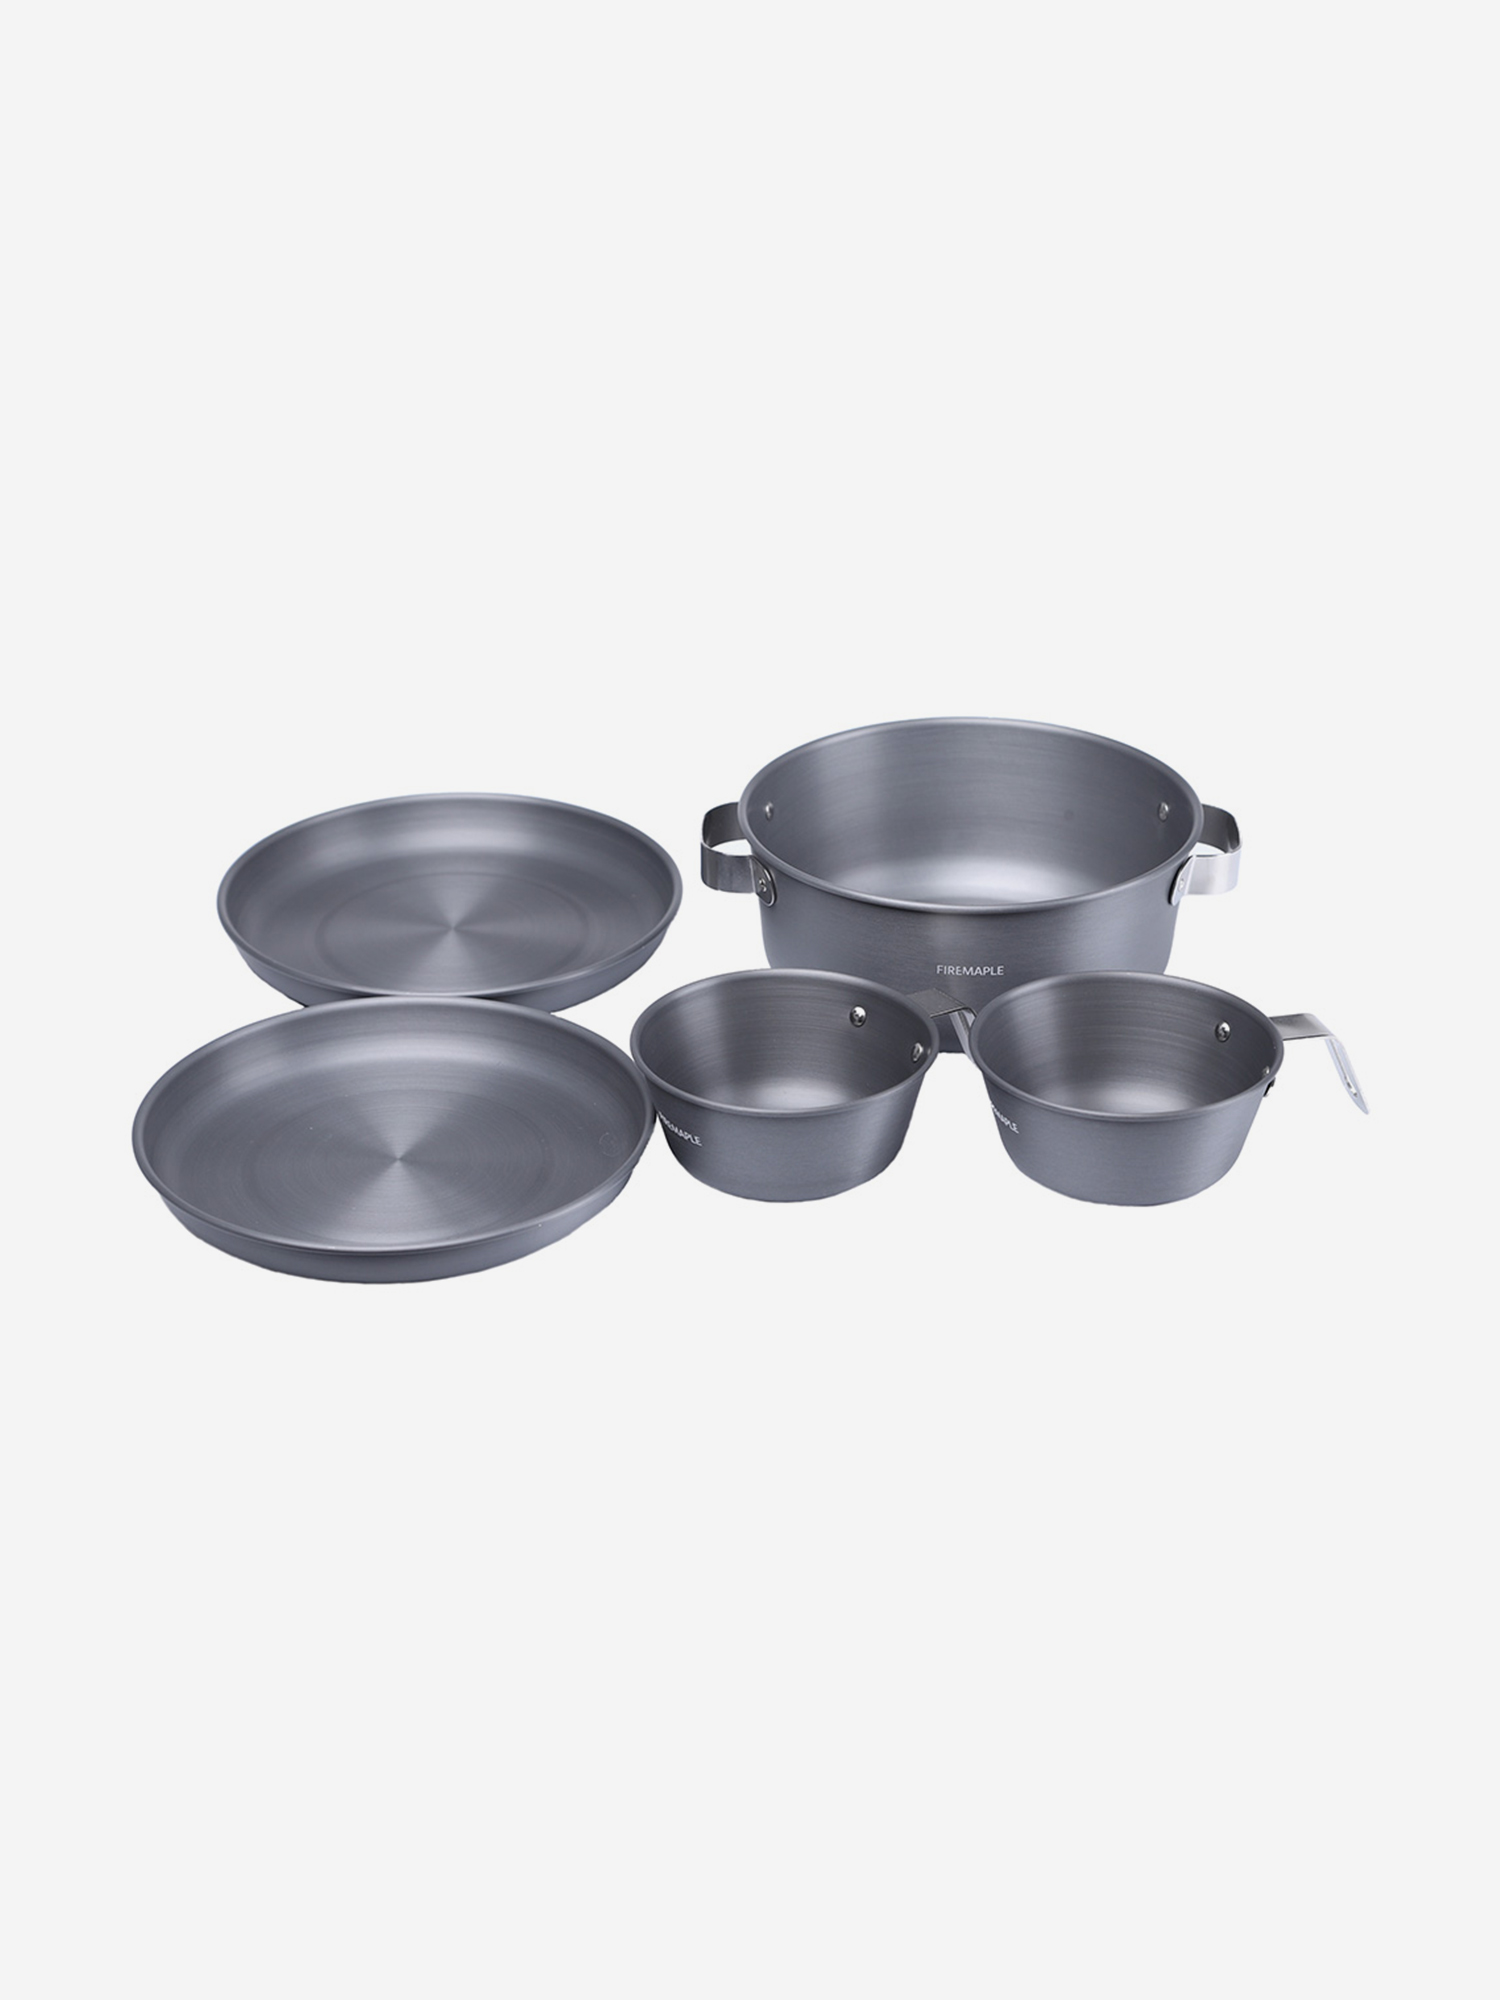 Набор посуды Fire-Maple Gourmet Set, Серый набор из 4 х ножей в подставке wmf grand gourmet